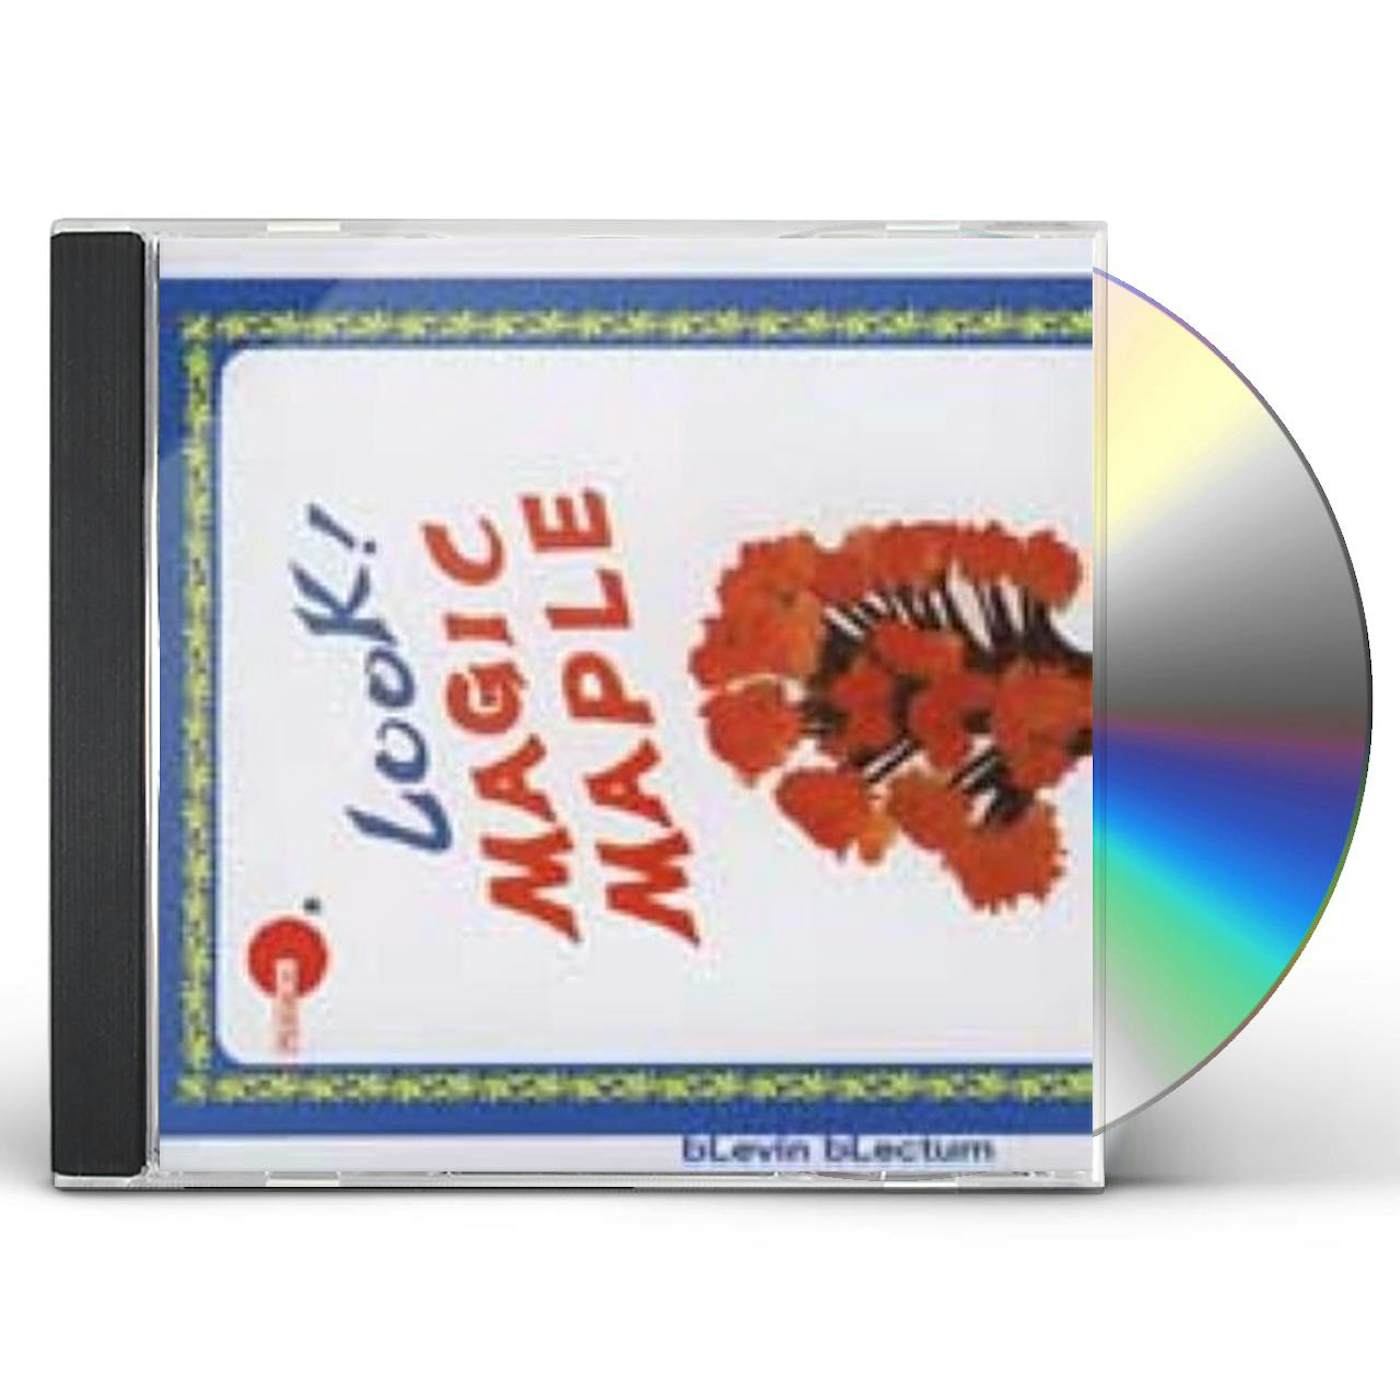 Blevin Blectum MAGIC MAPLE CD